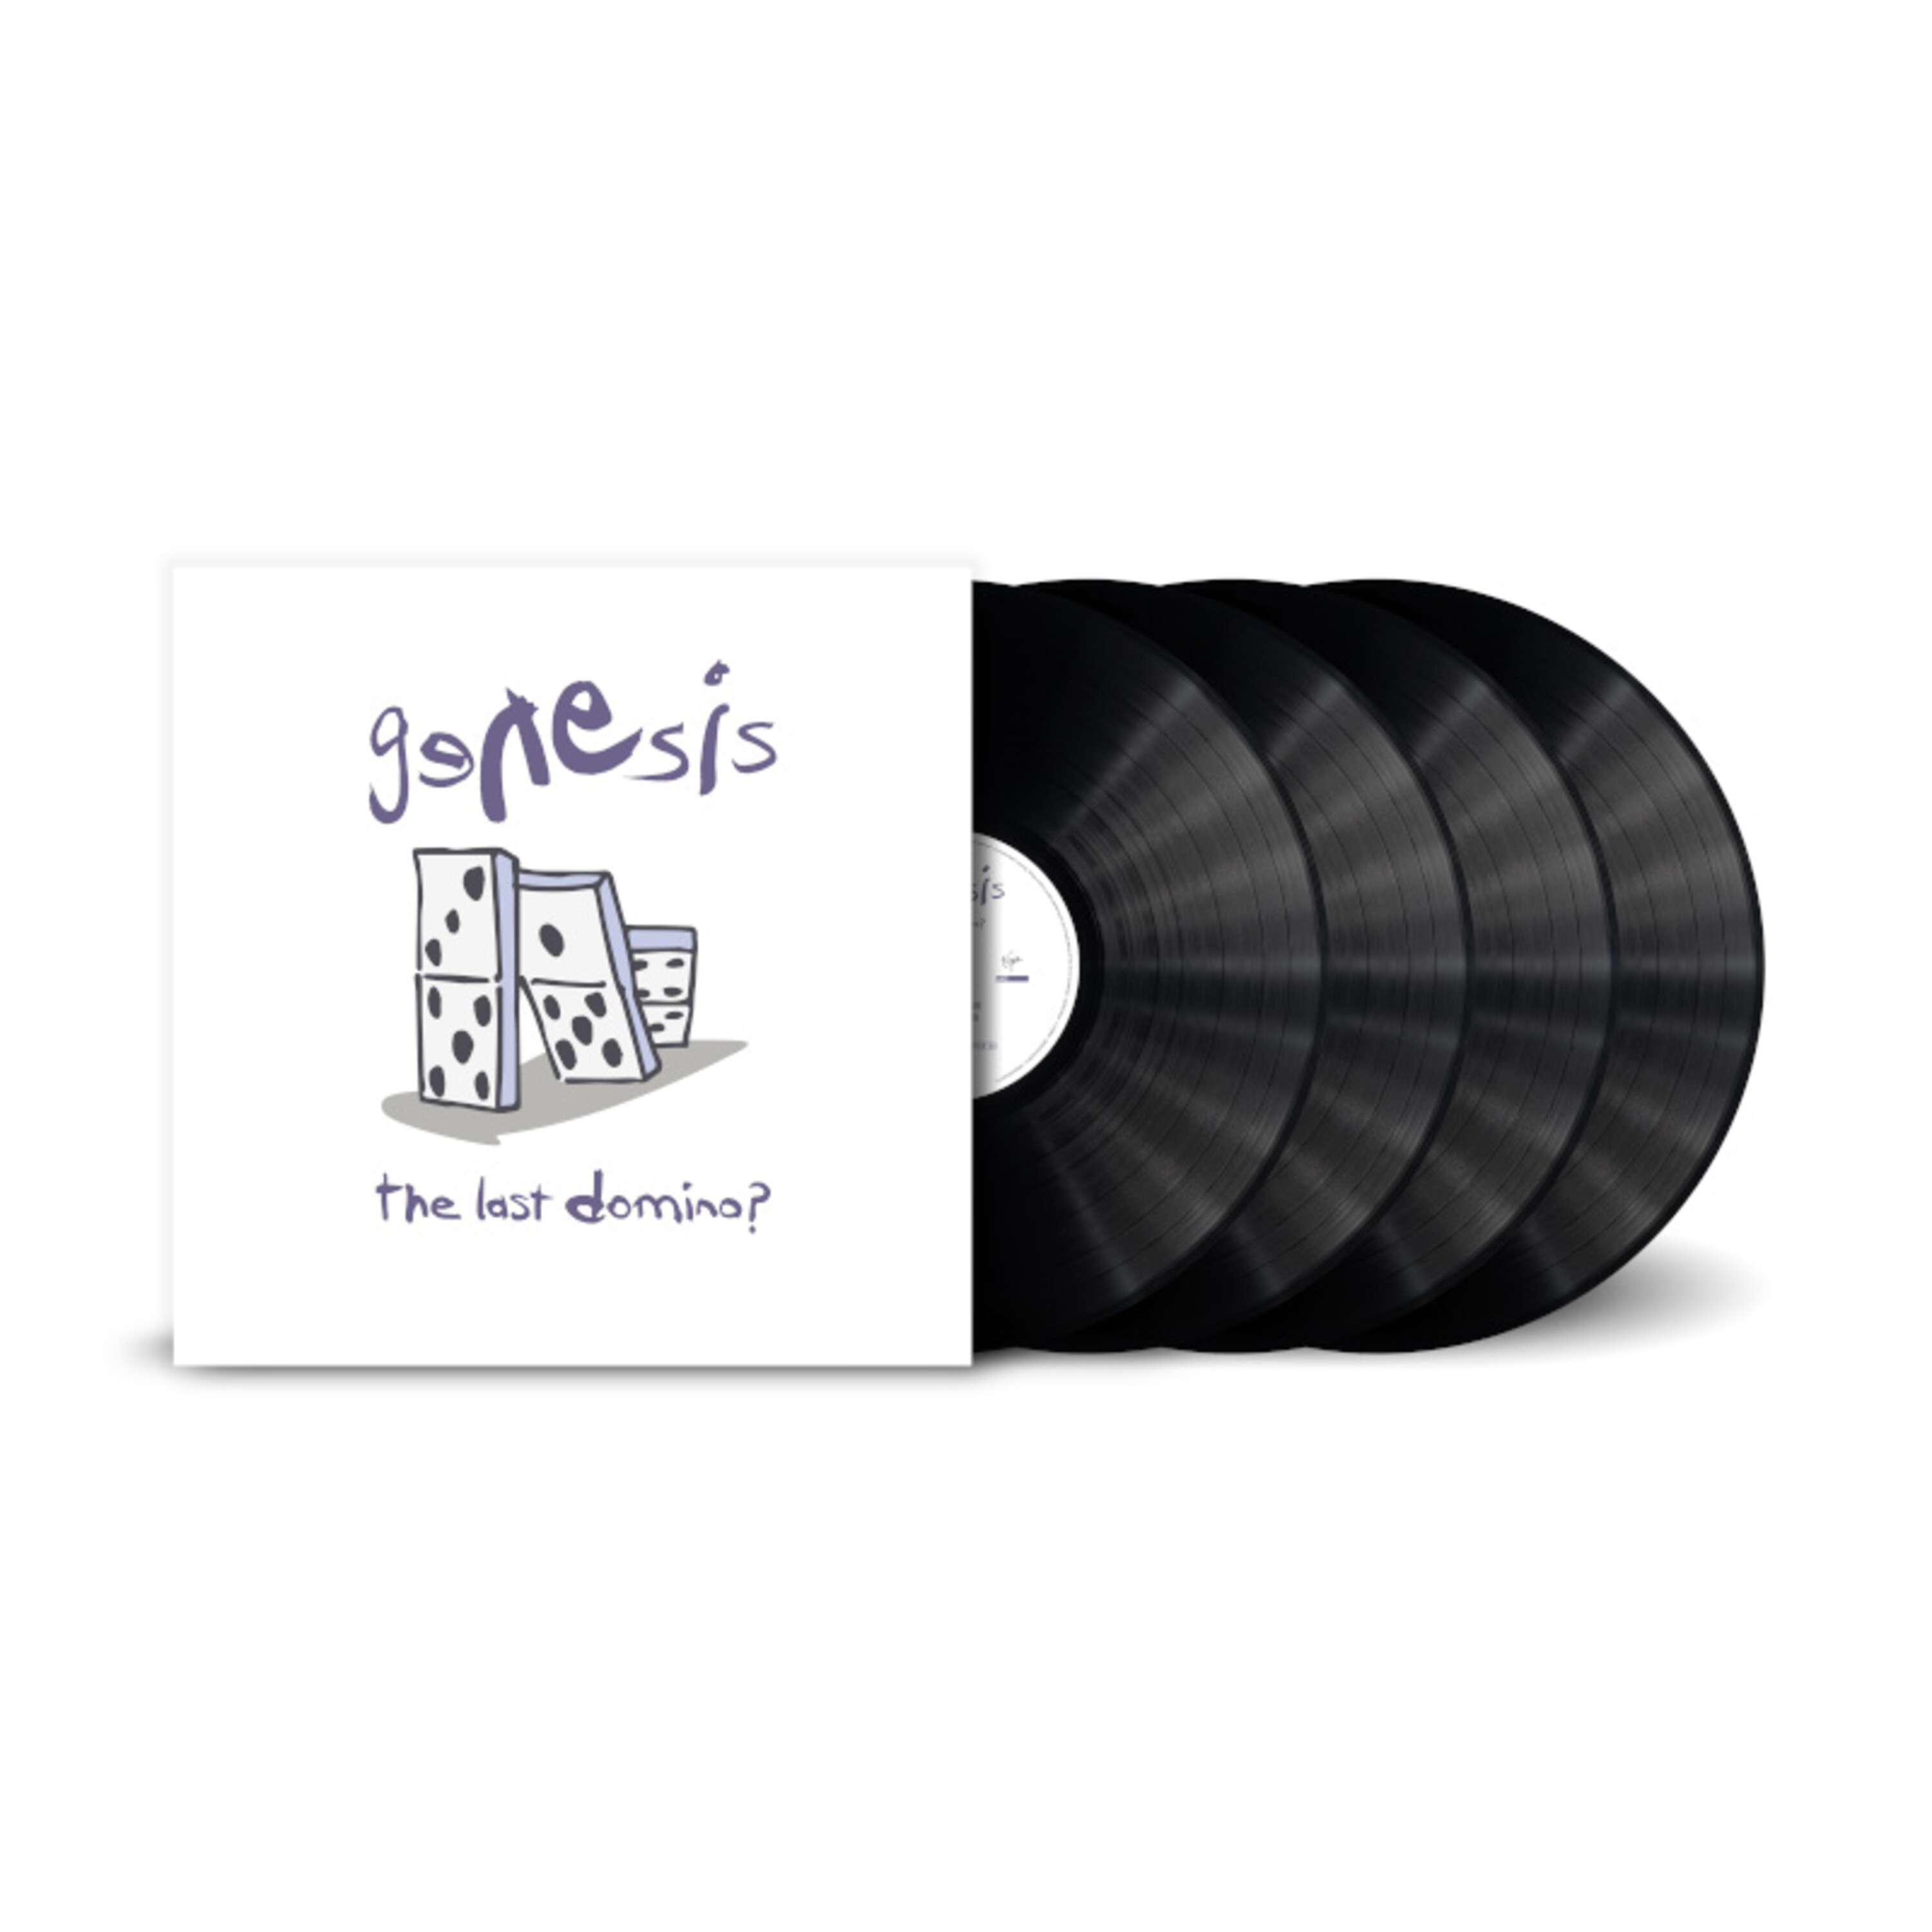 Genesis - The Last Domino? The Hits